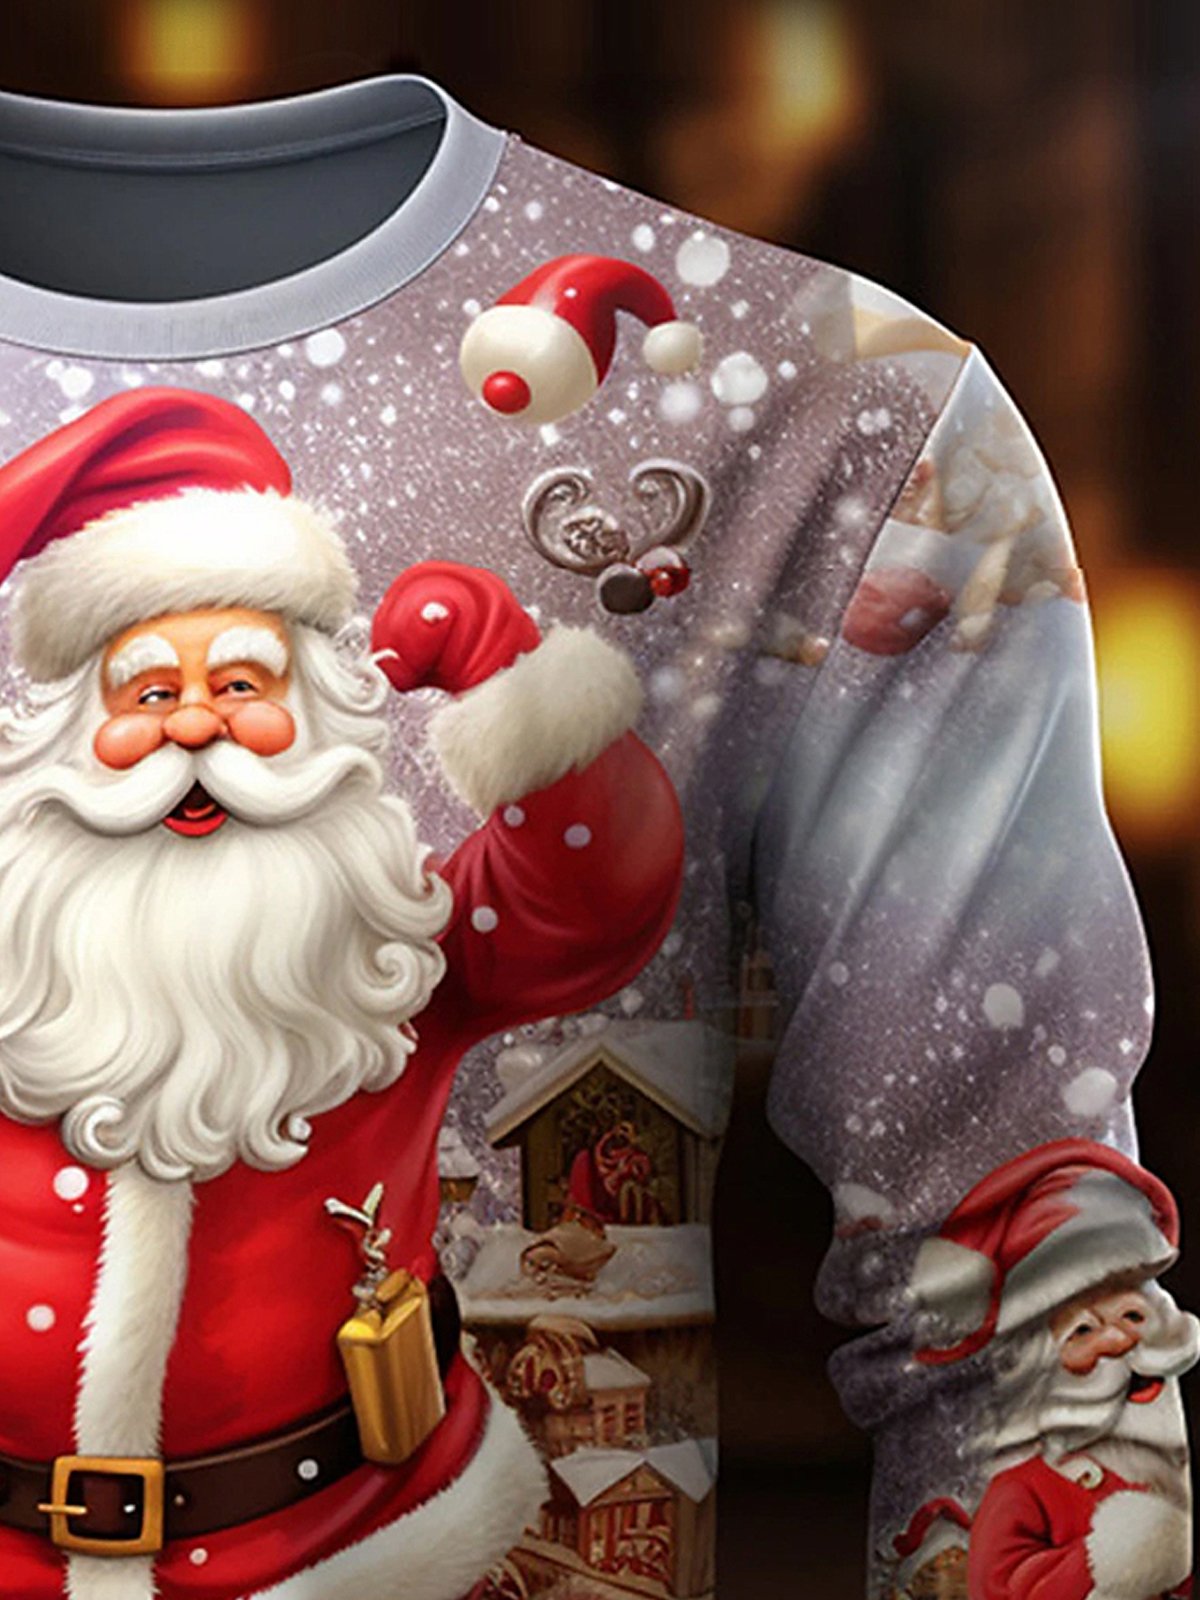 Royaura Men's Christmas Santa Print Round Neck Long Sleeve Sweatshirt